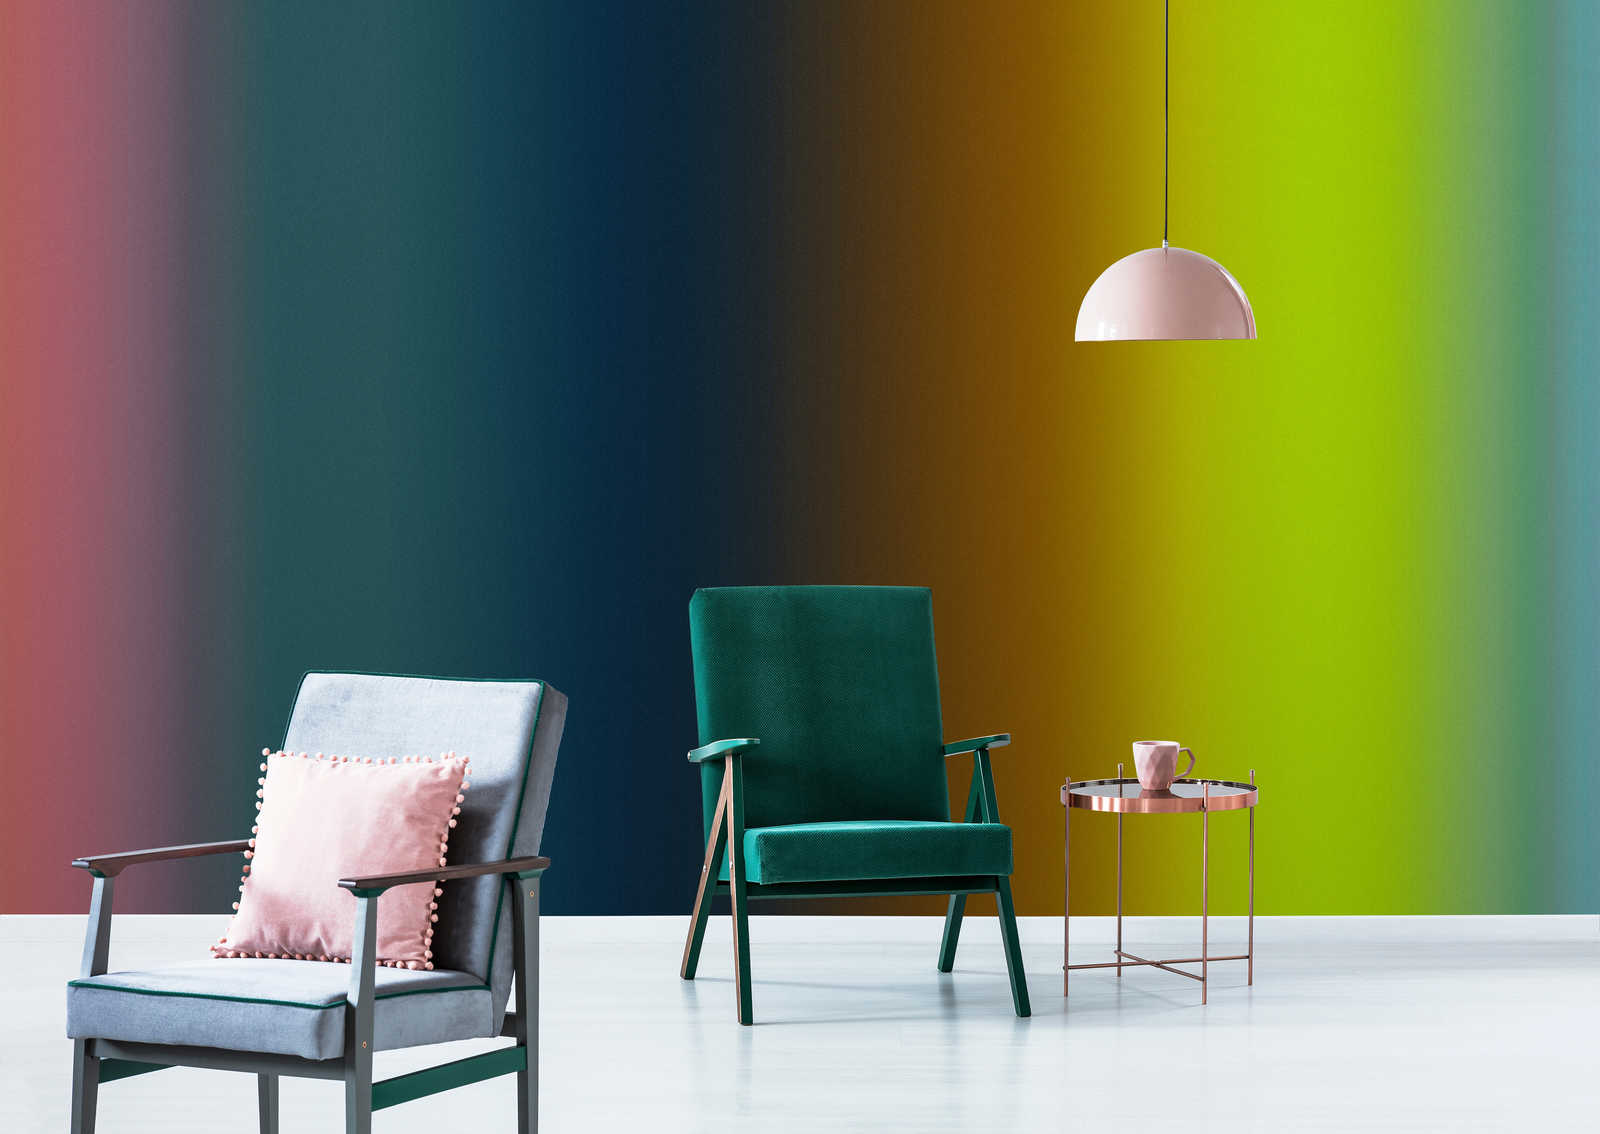             Over the Rainbow 1 - photo wallpaper colour spectrum rainbow modern
        